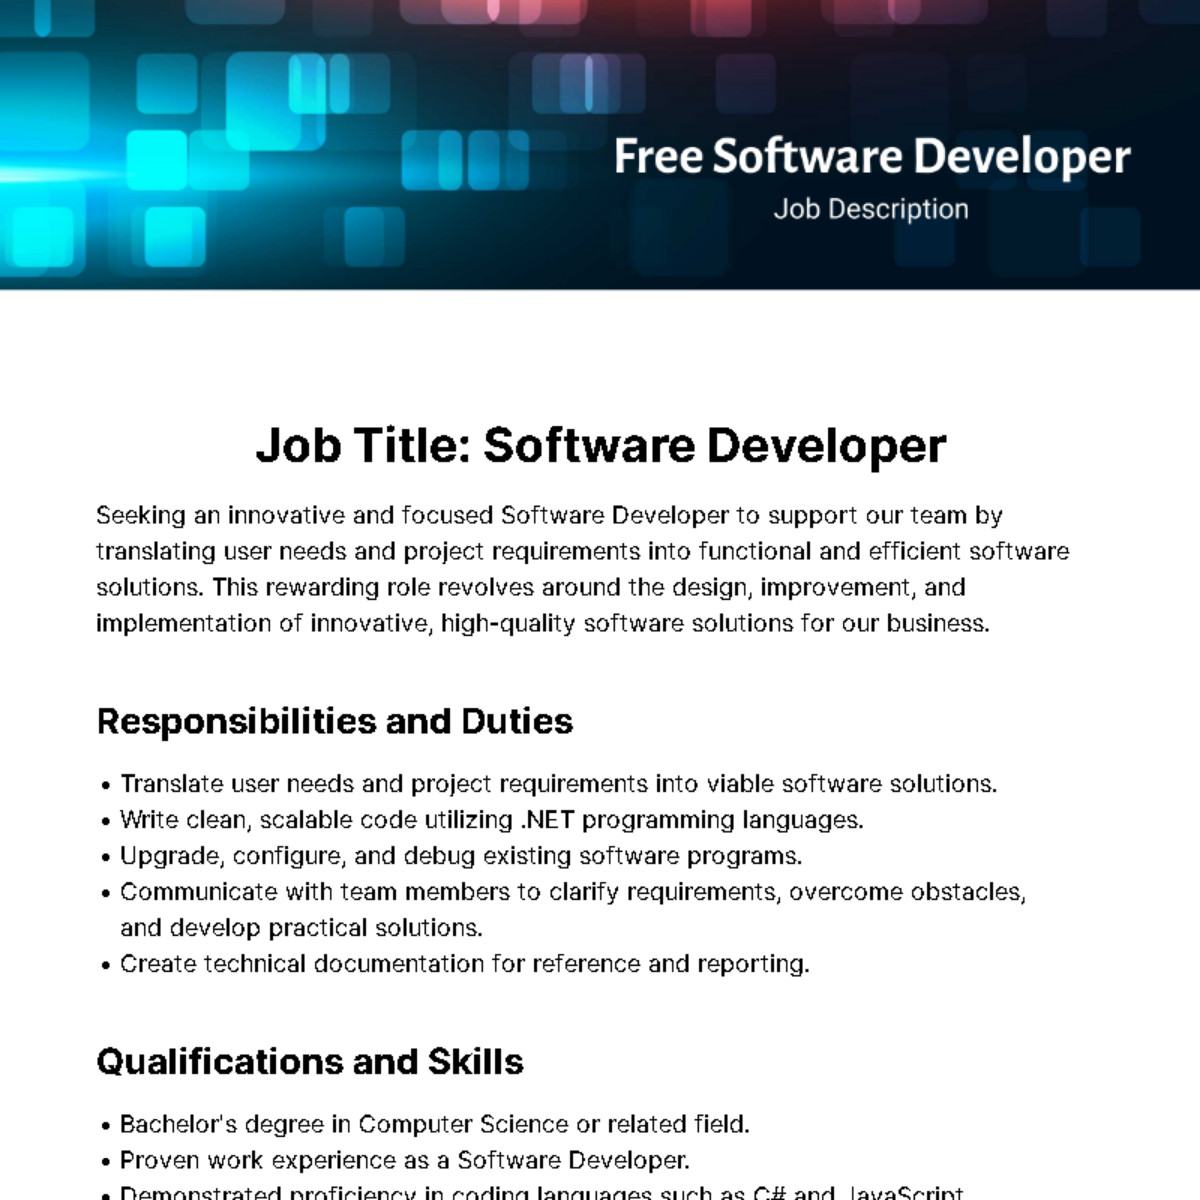 Free Software Developer Job Description Template